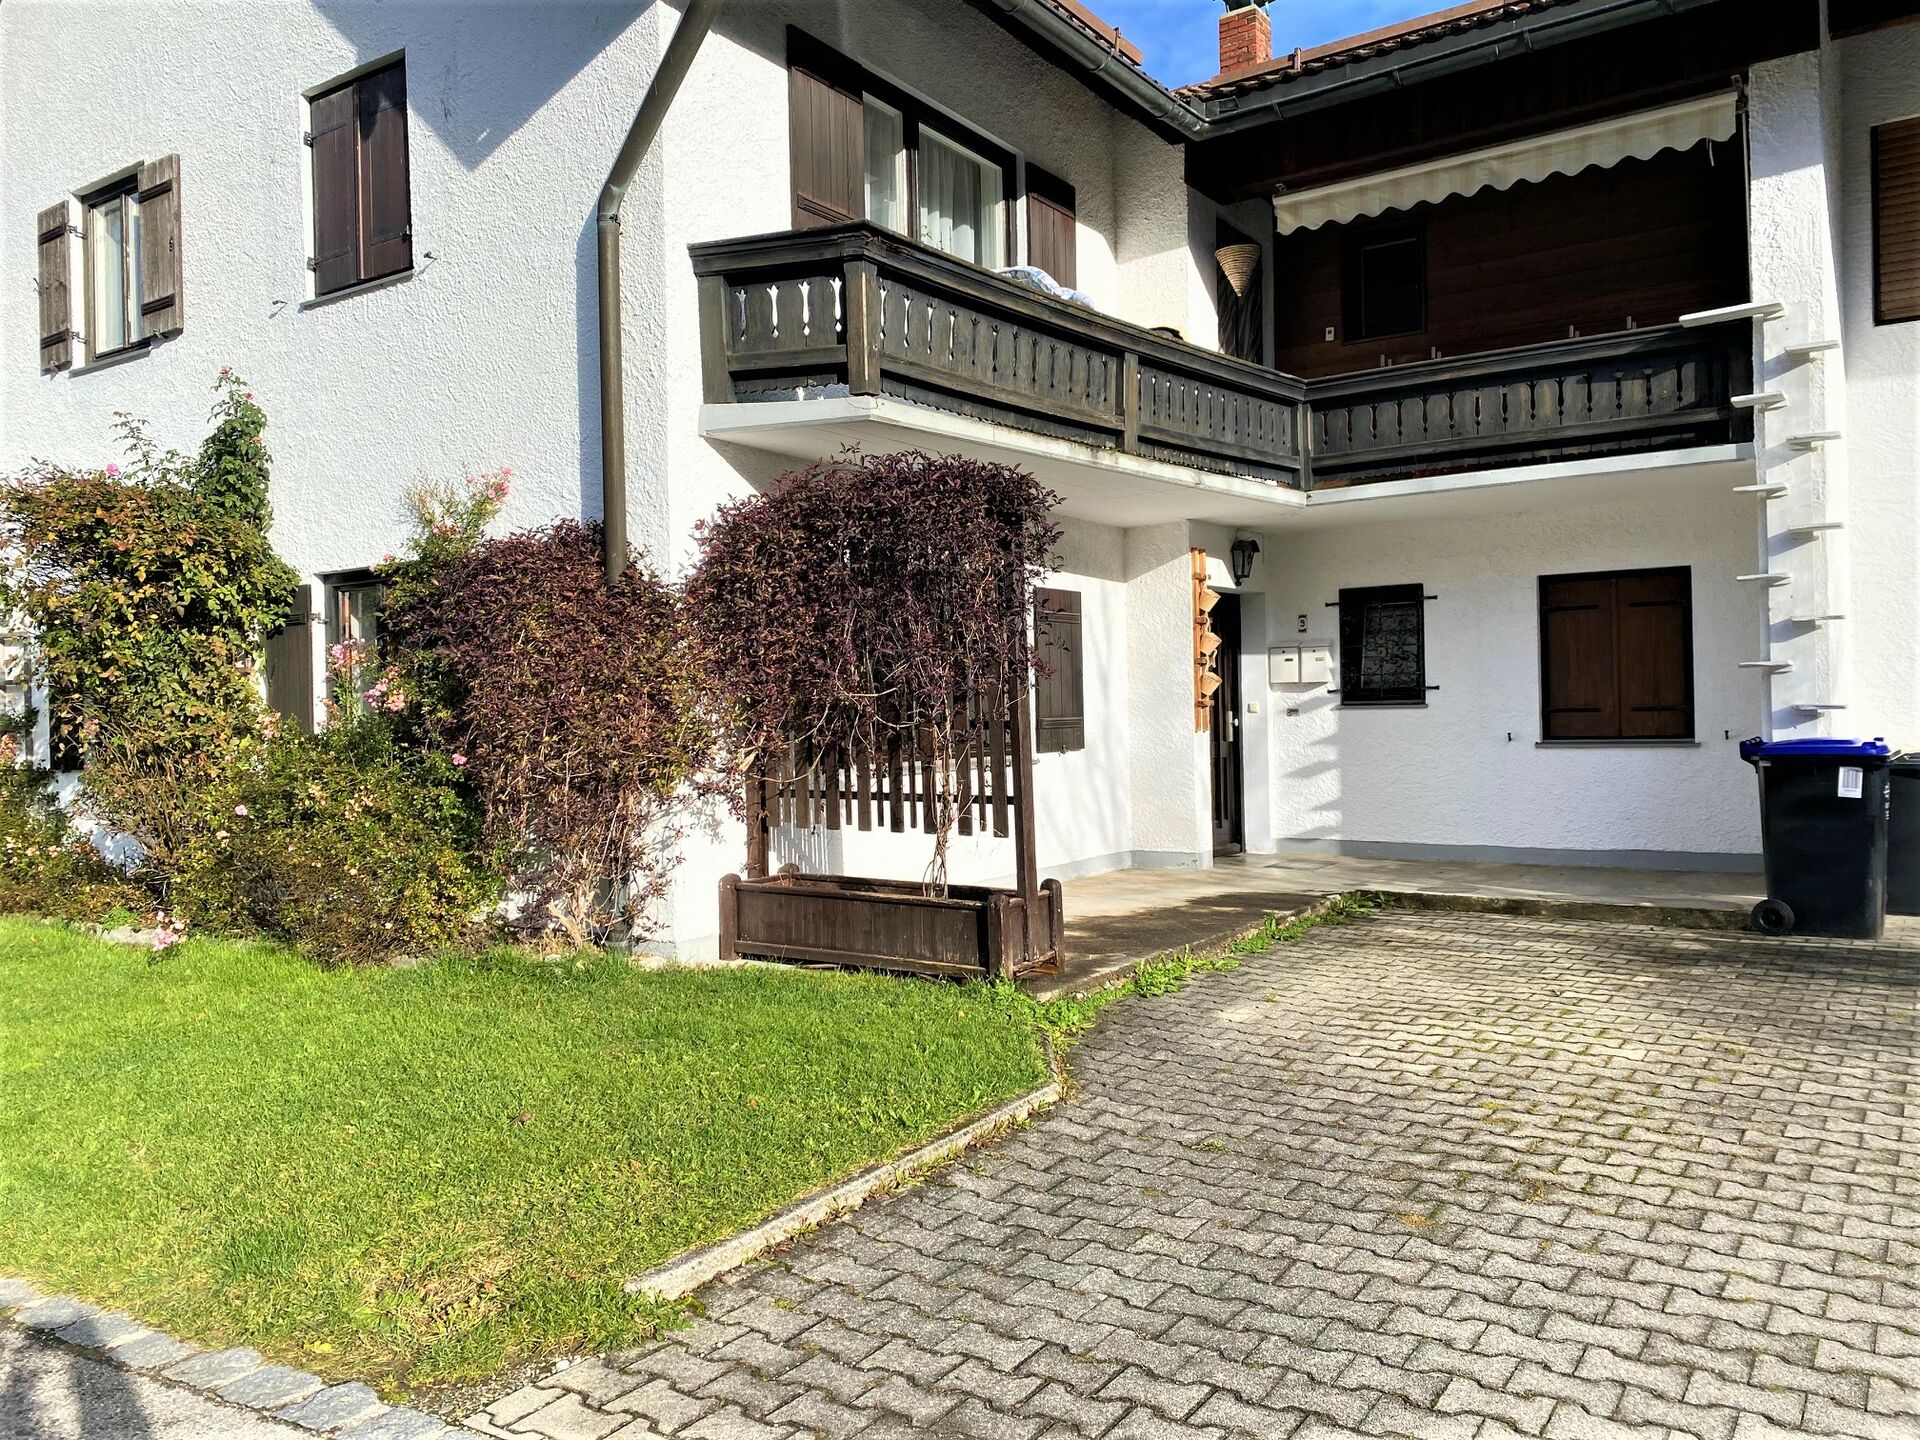 Jetzt Haus kaufen in Rosenheim & Umgebung!